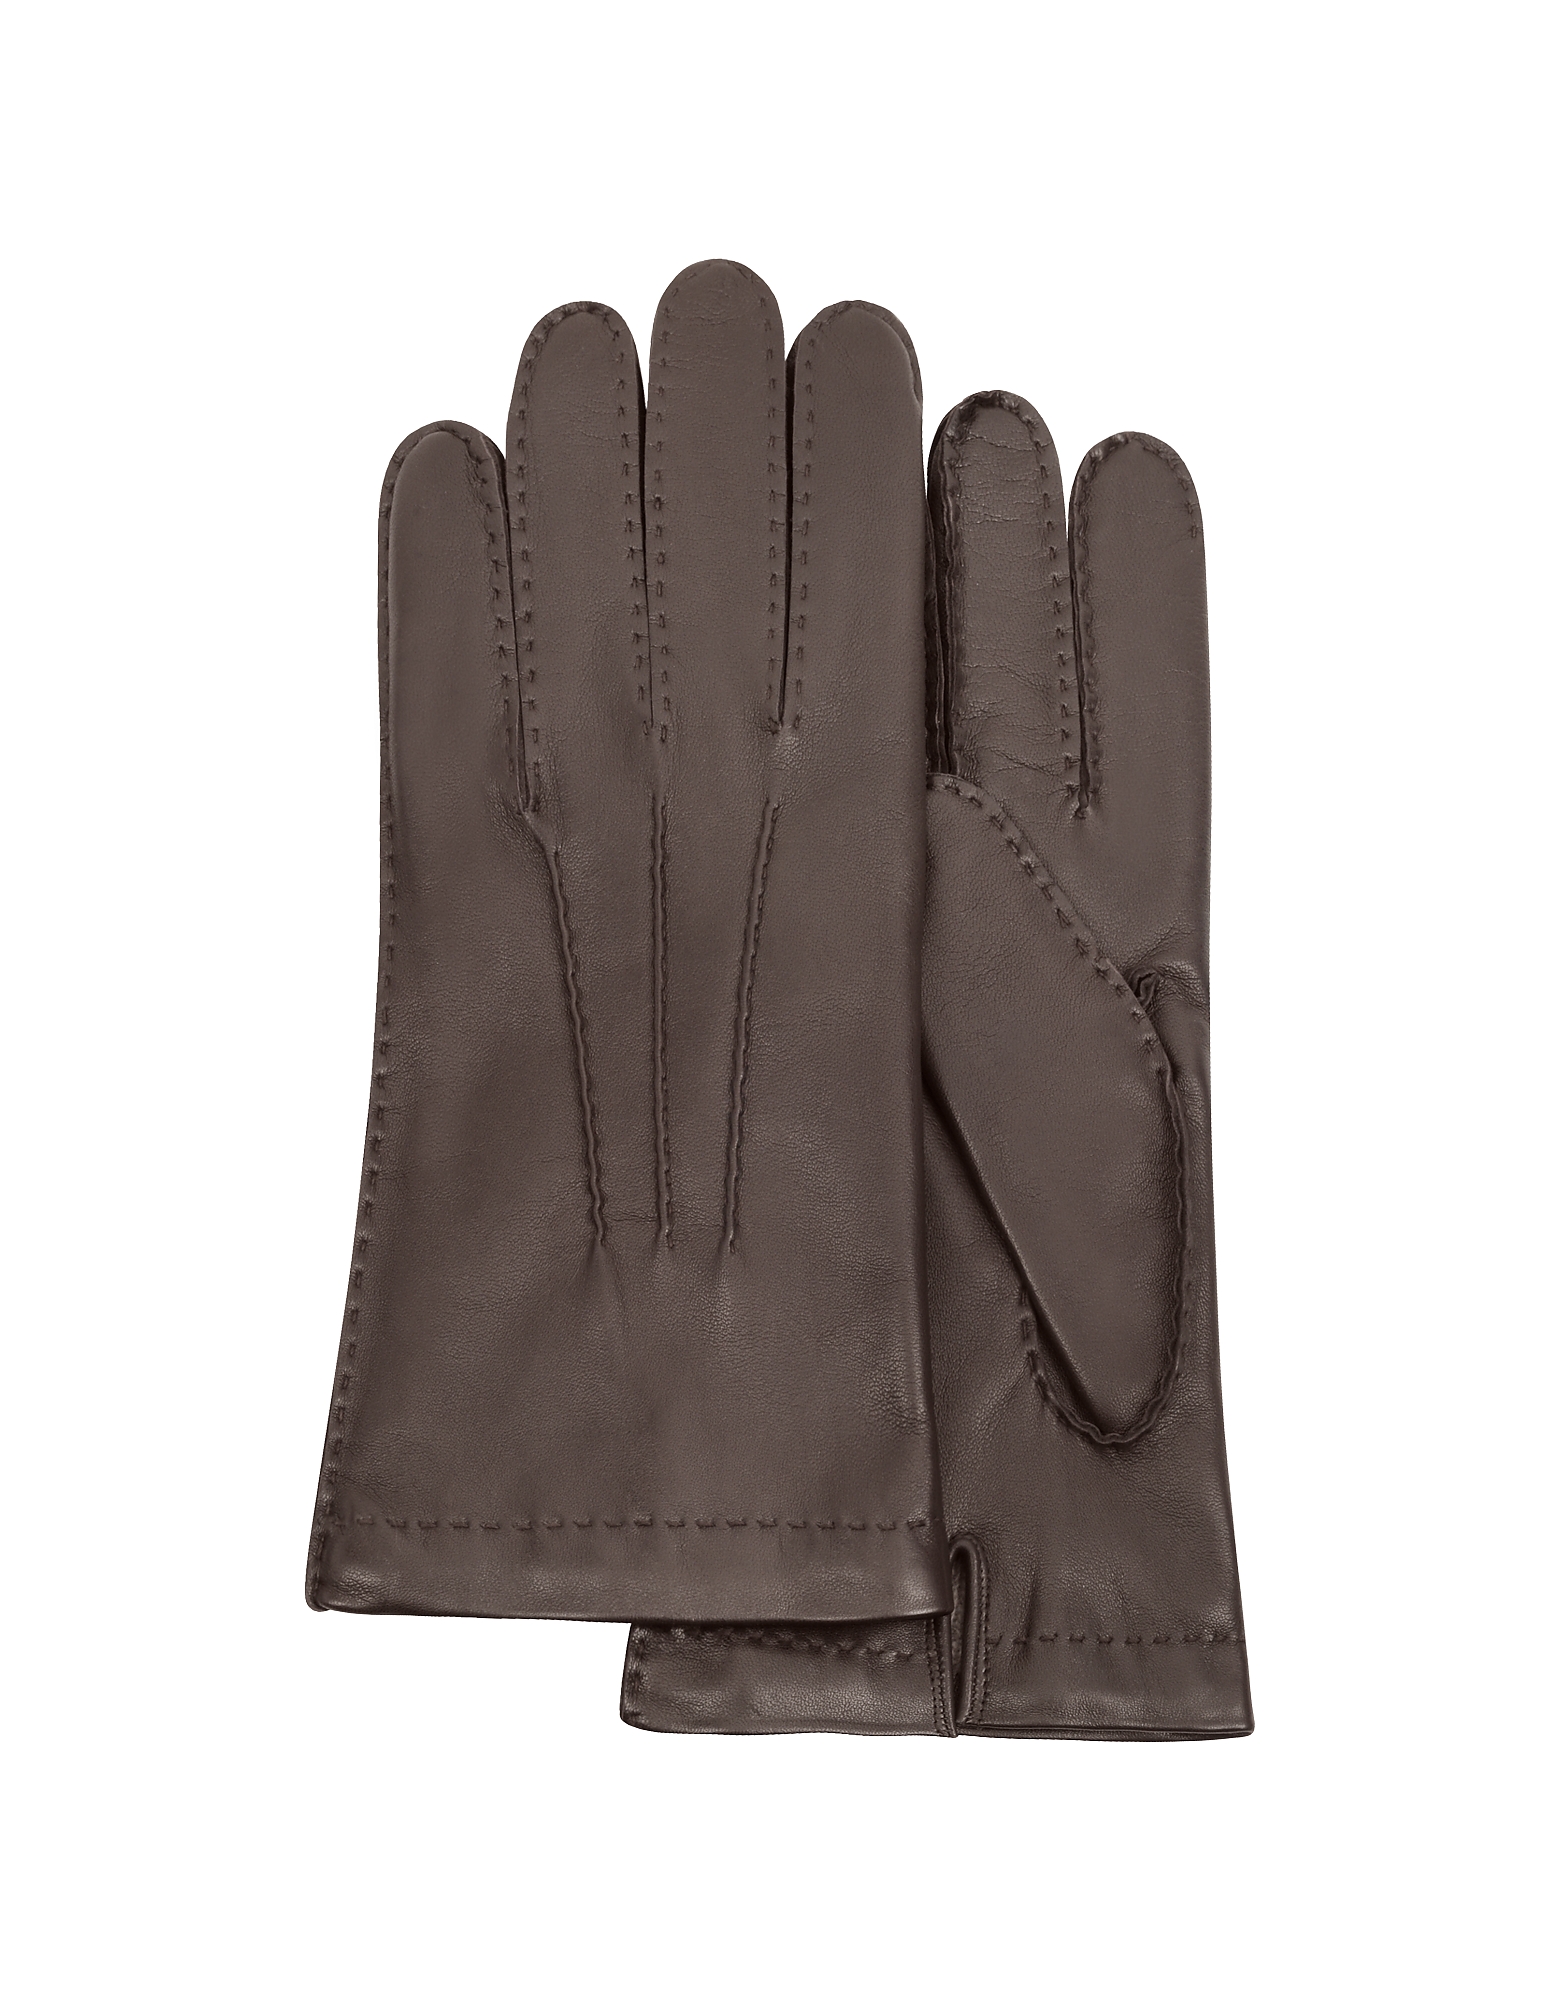 Forzieri Men's Gloves Men's Cashmere Lined Dark Brown Italian Leather Gloves